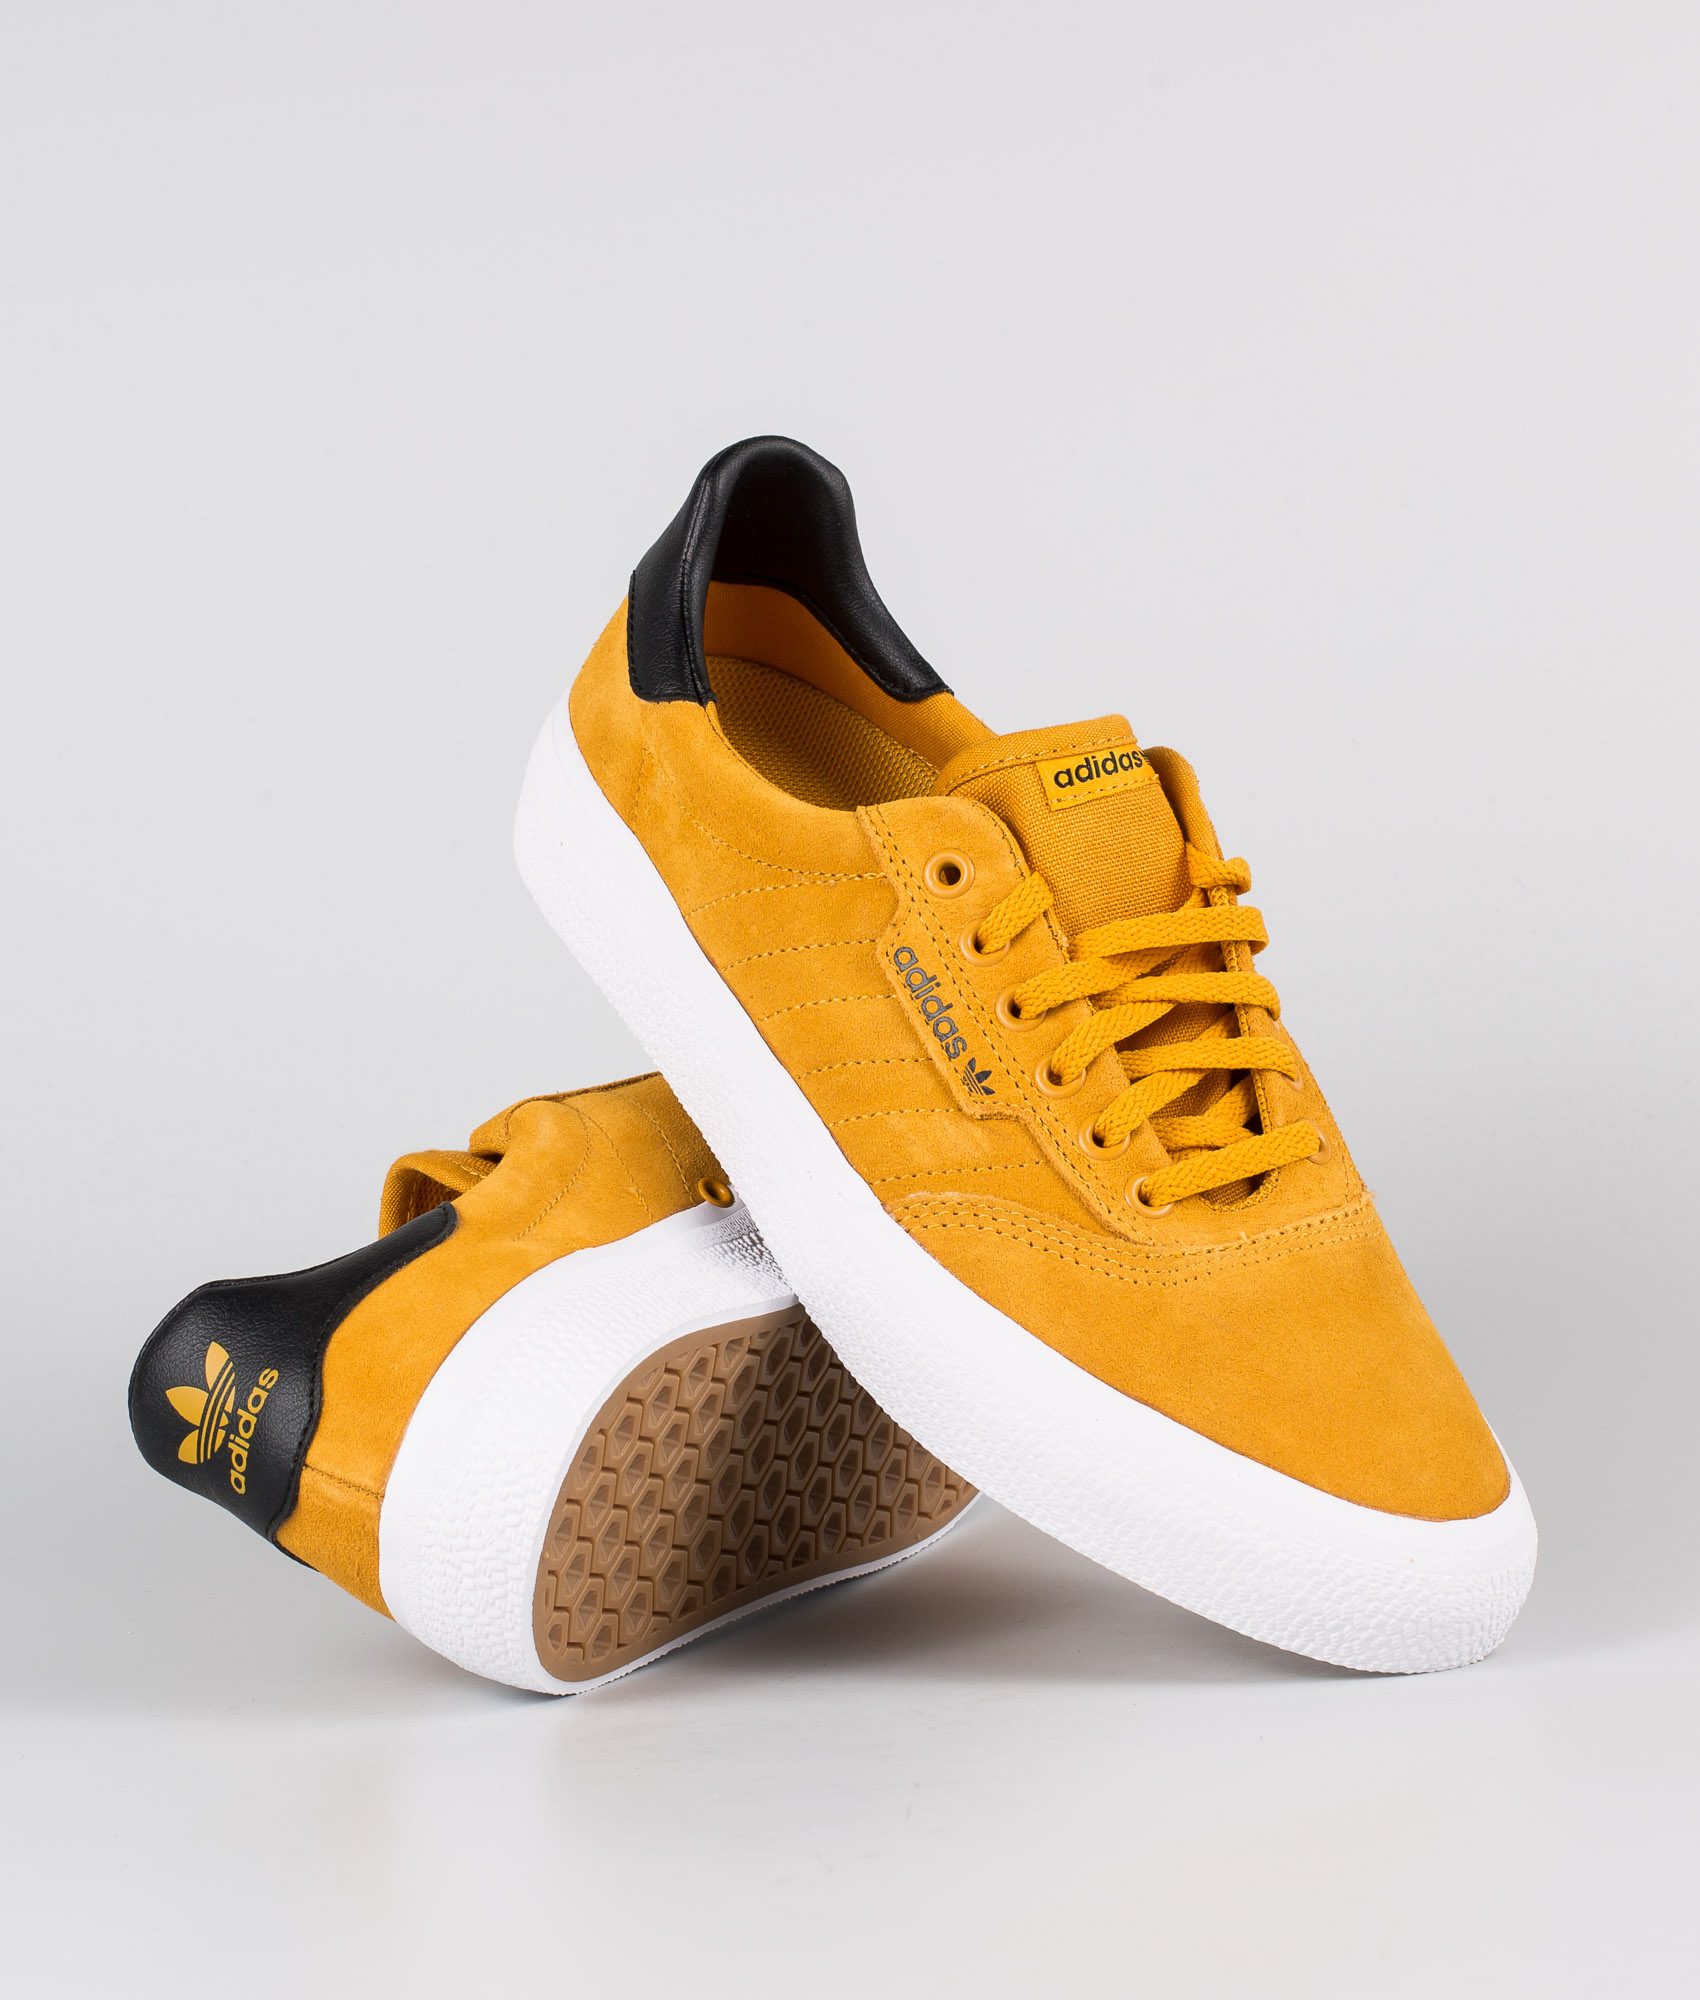 yellow adidas skate shoes